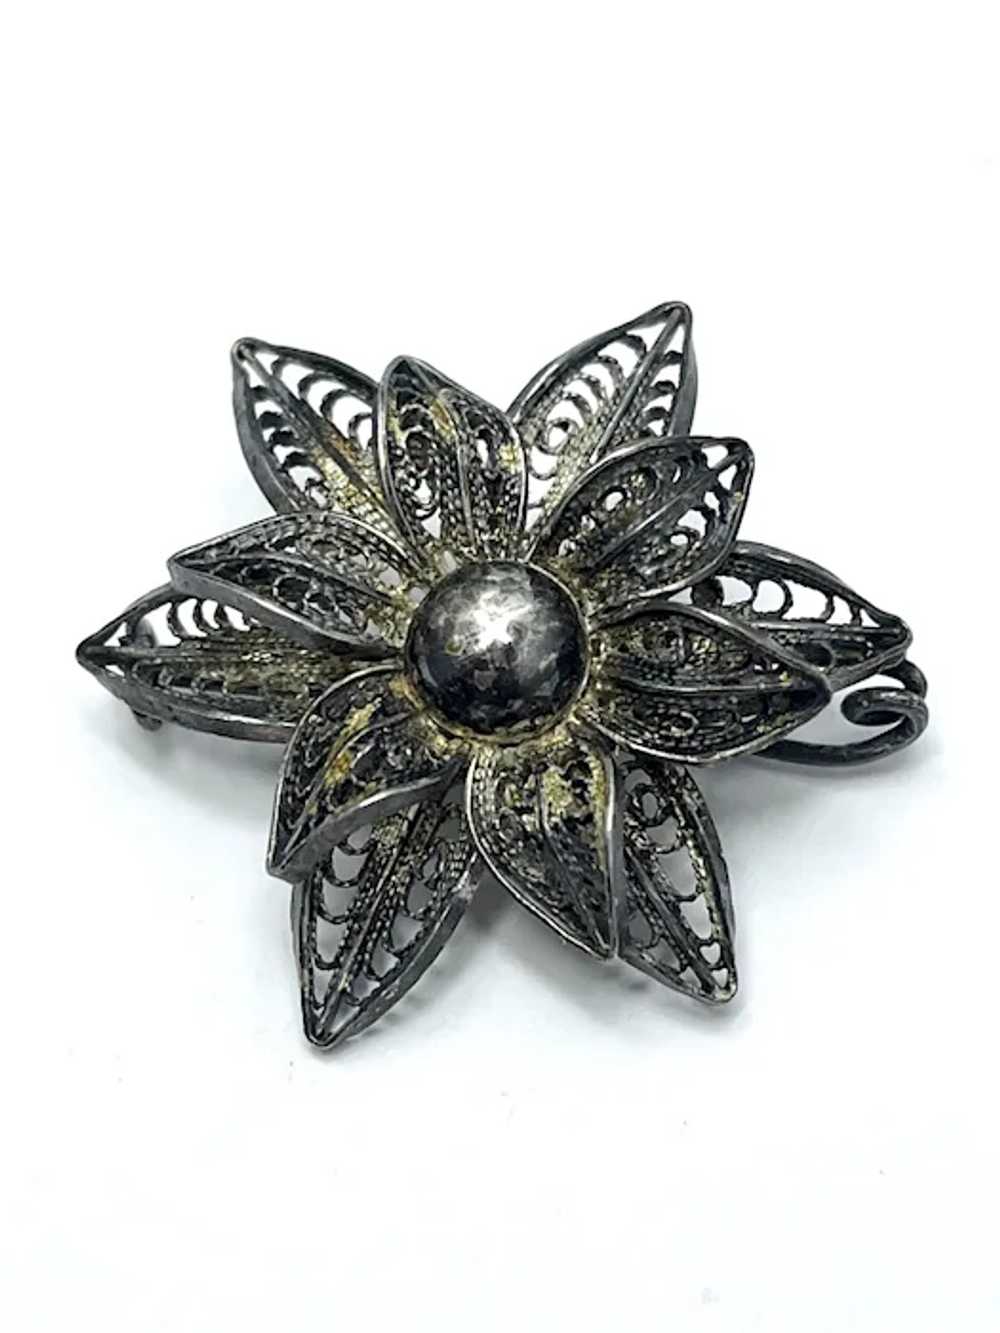 Vintage Sterling Silver Flower Brooch Pin - image 2